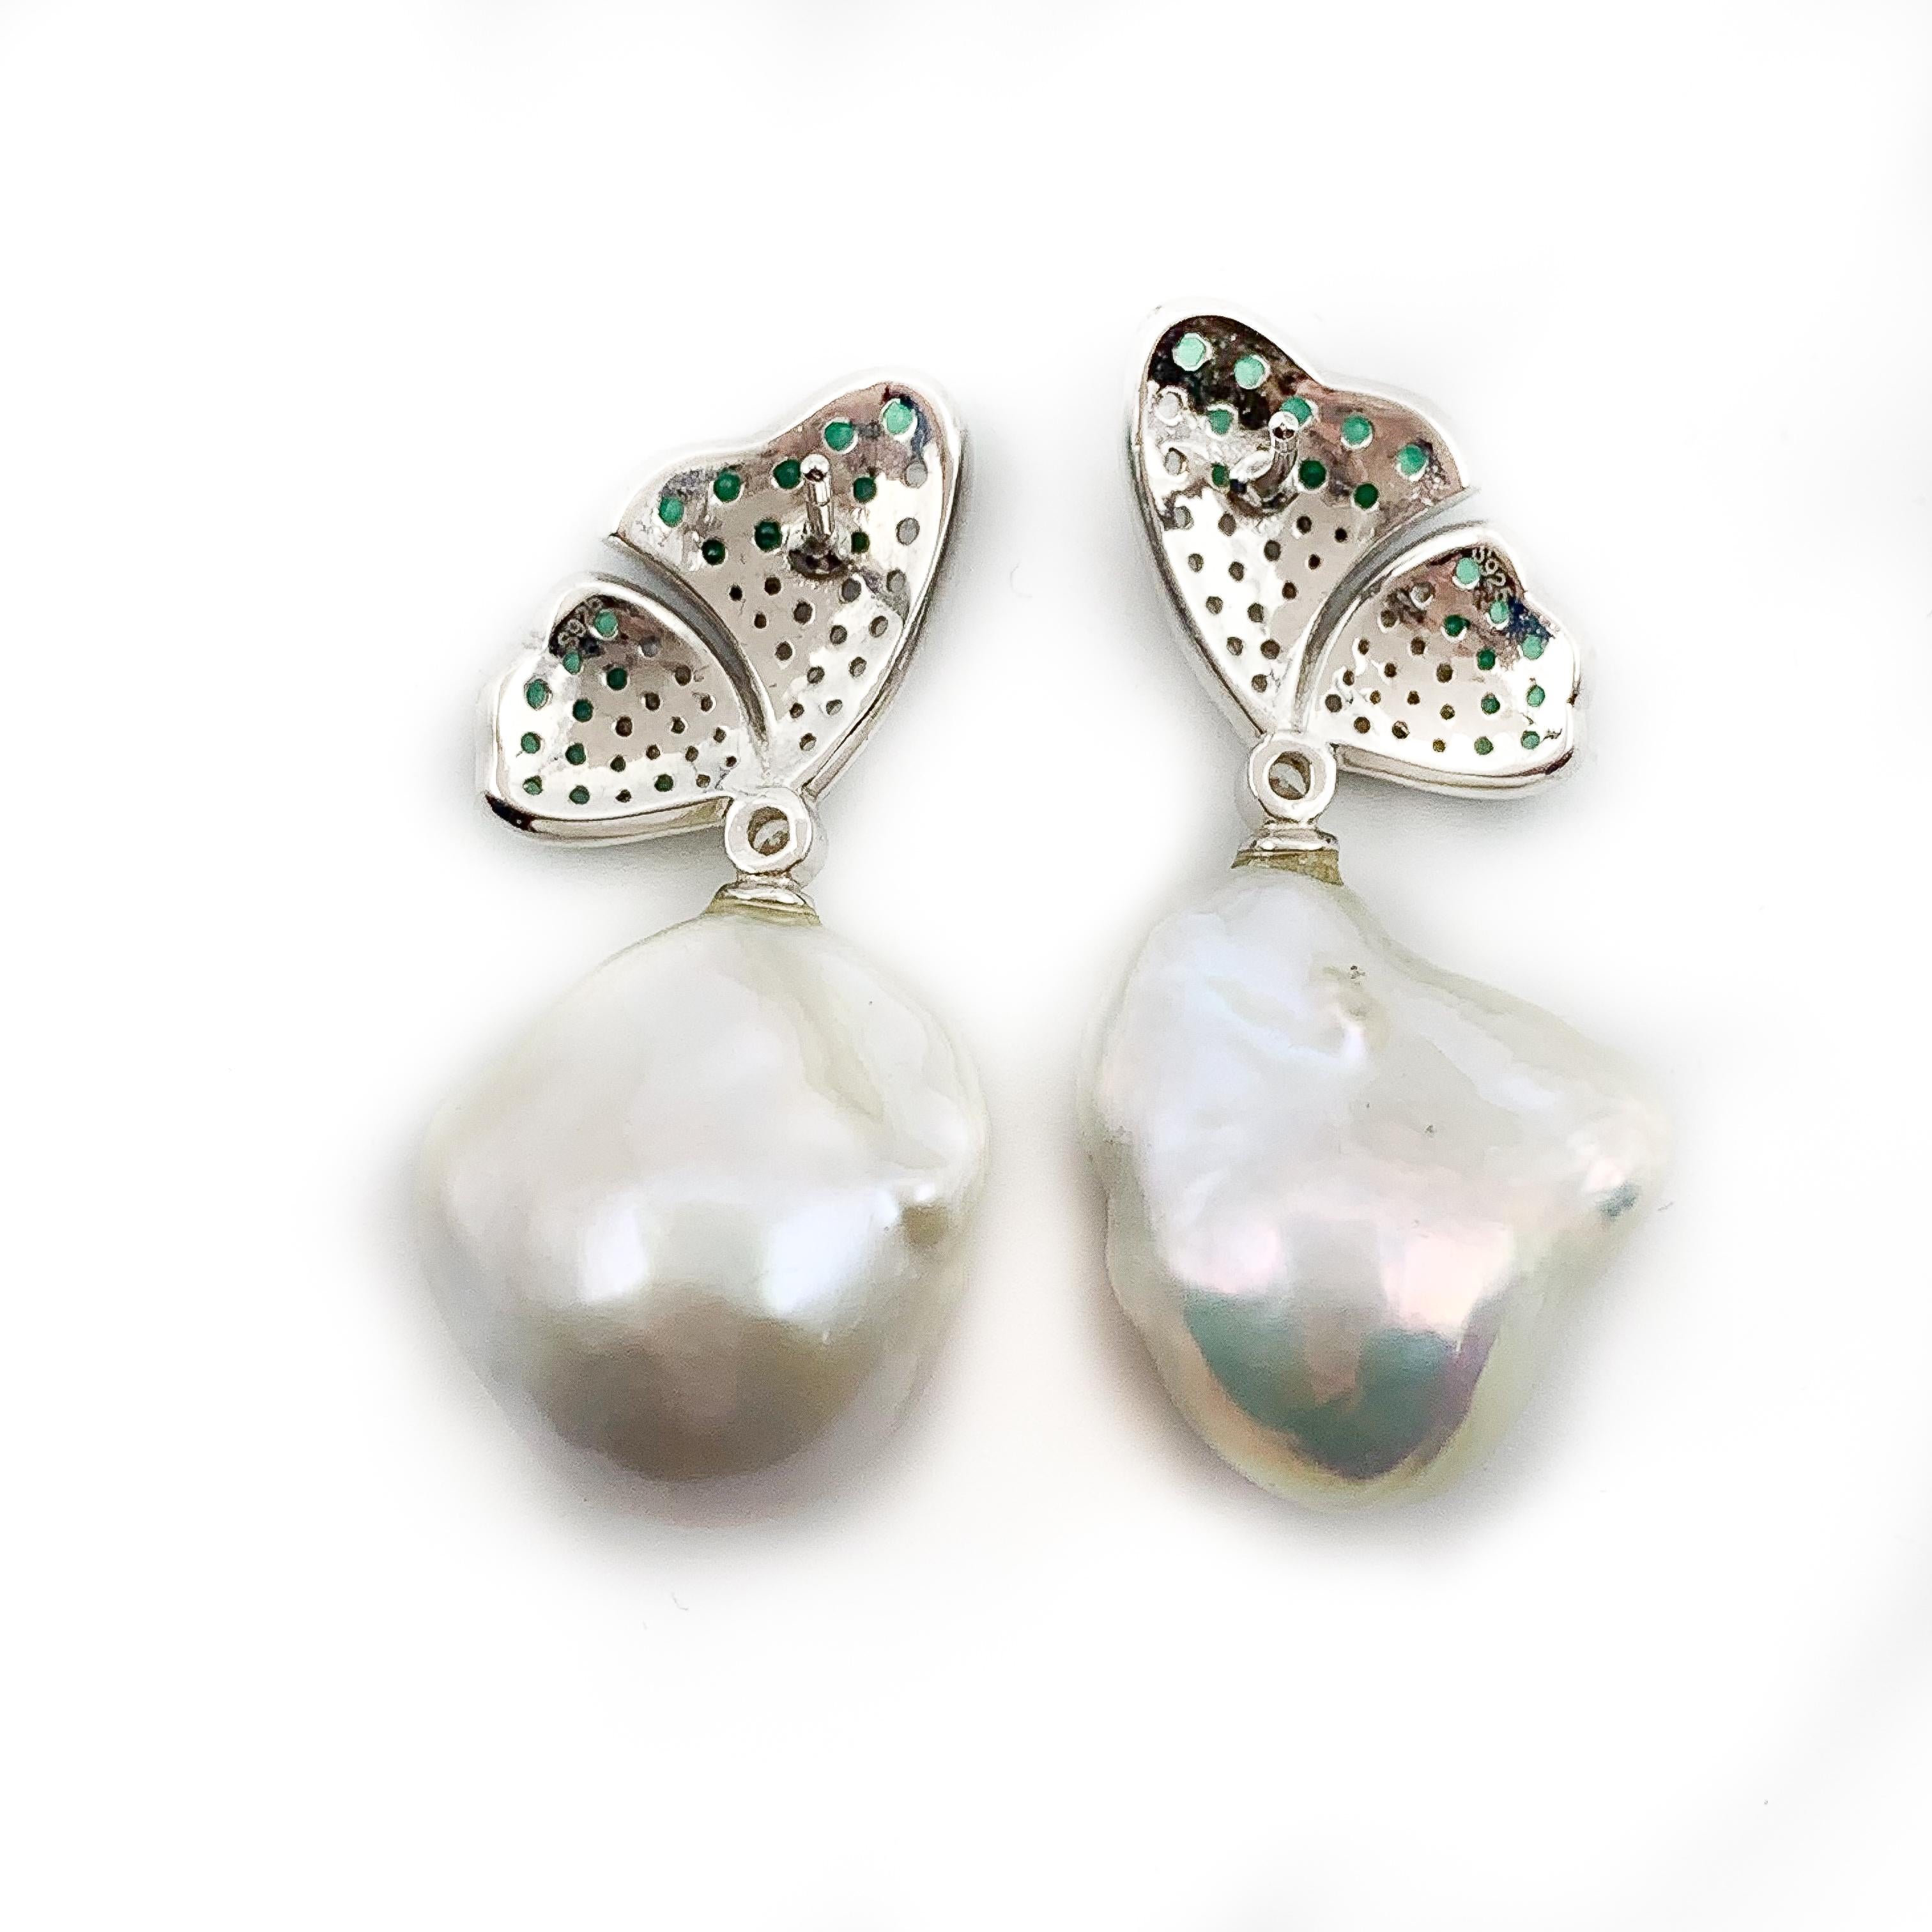 Sterling gem set cz (Green & Crystal) 
Very fine natural color fresh water pearls 
Pendant Earrings Pair
